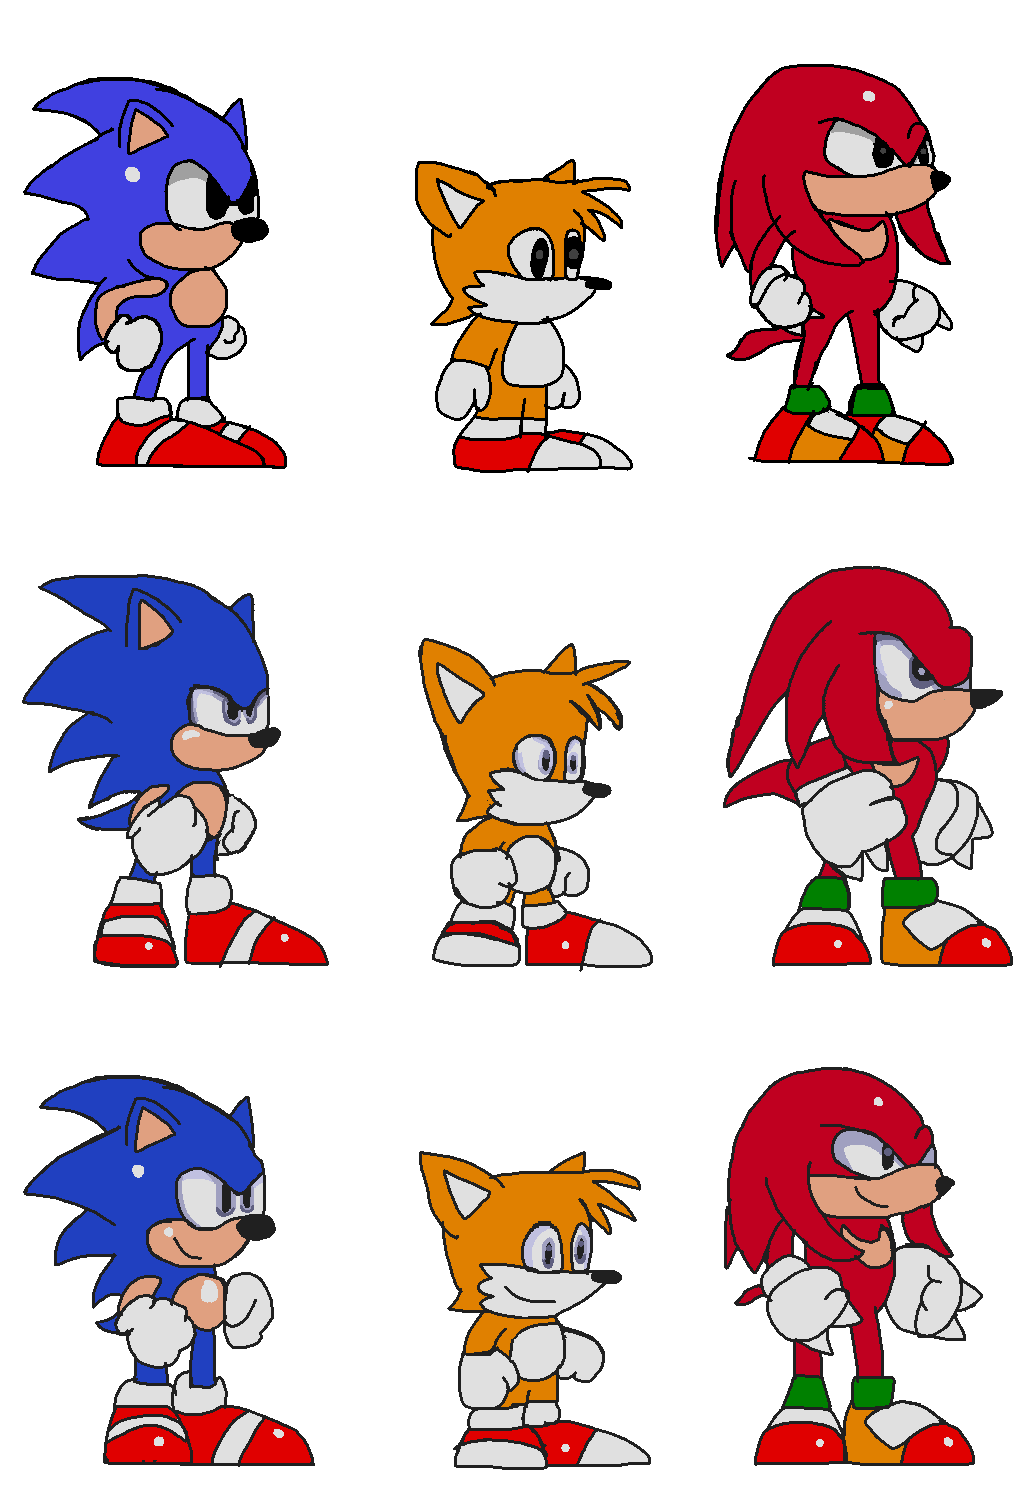 S2 Sonic Sprite is traced over Majin Sonic Shape - by Abbysek on DeviantArt